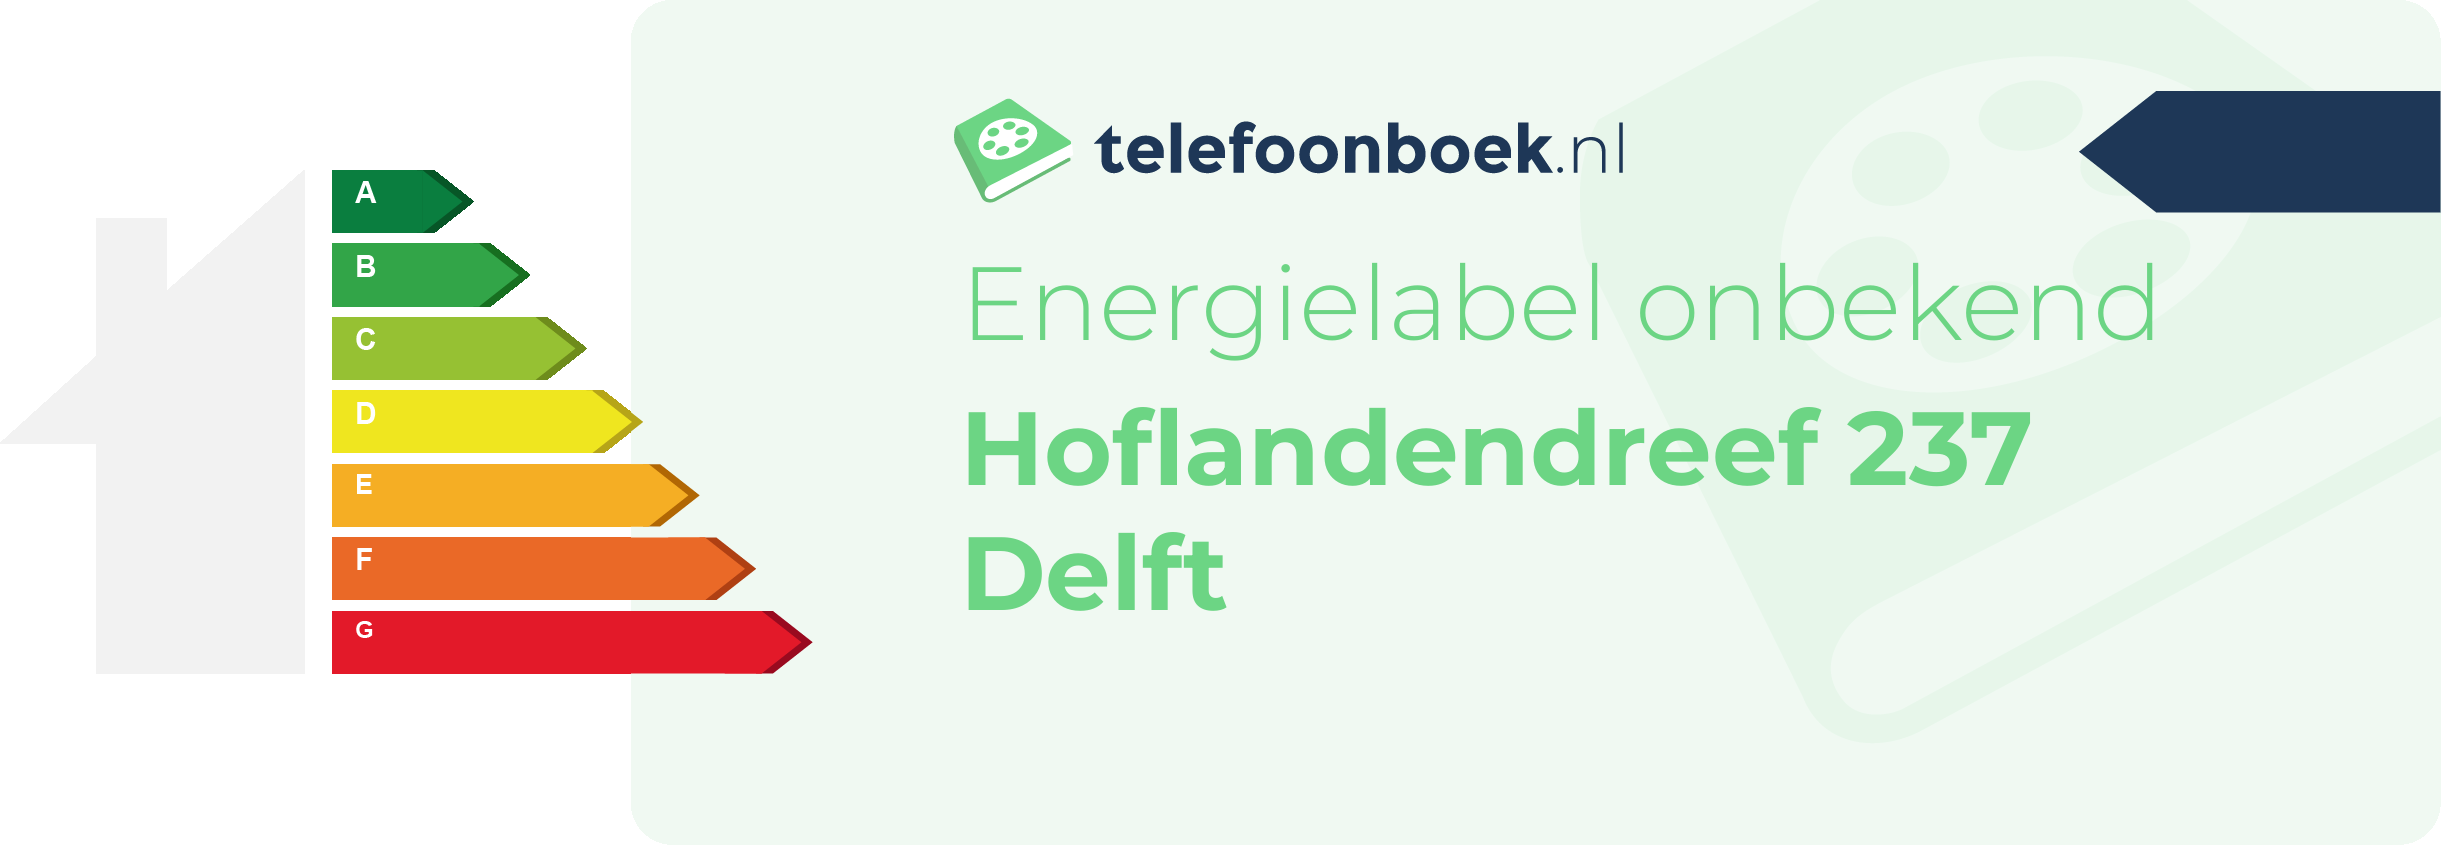 Energielabel Hoflandendreef 237 Delft